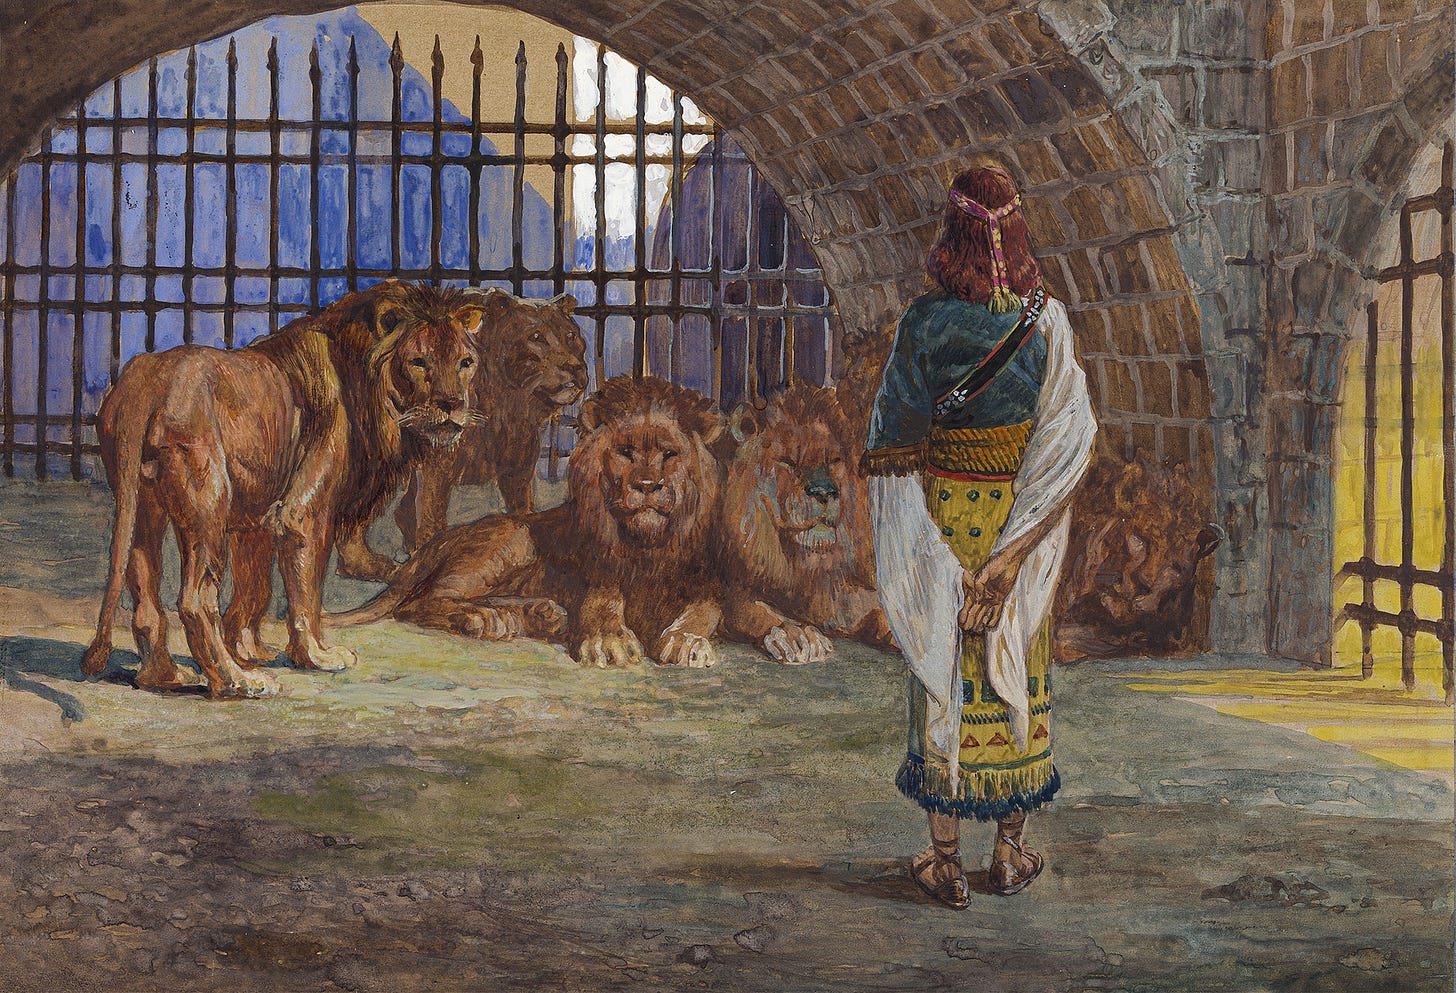 Daniel in the Lions’ Den (c. 1896-1902) by James Tissot